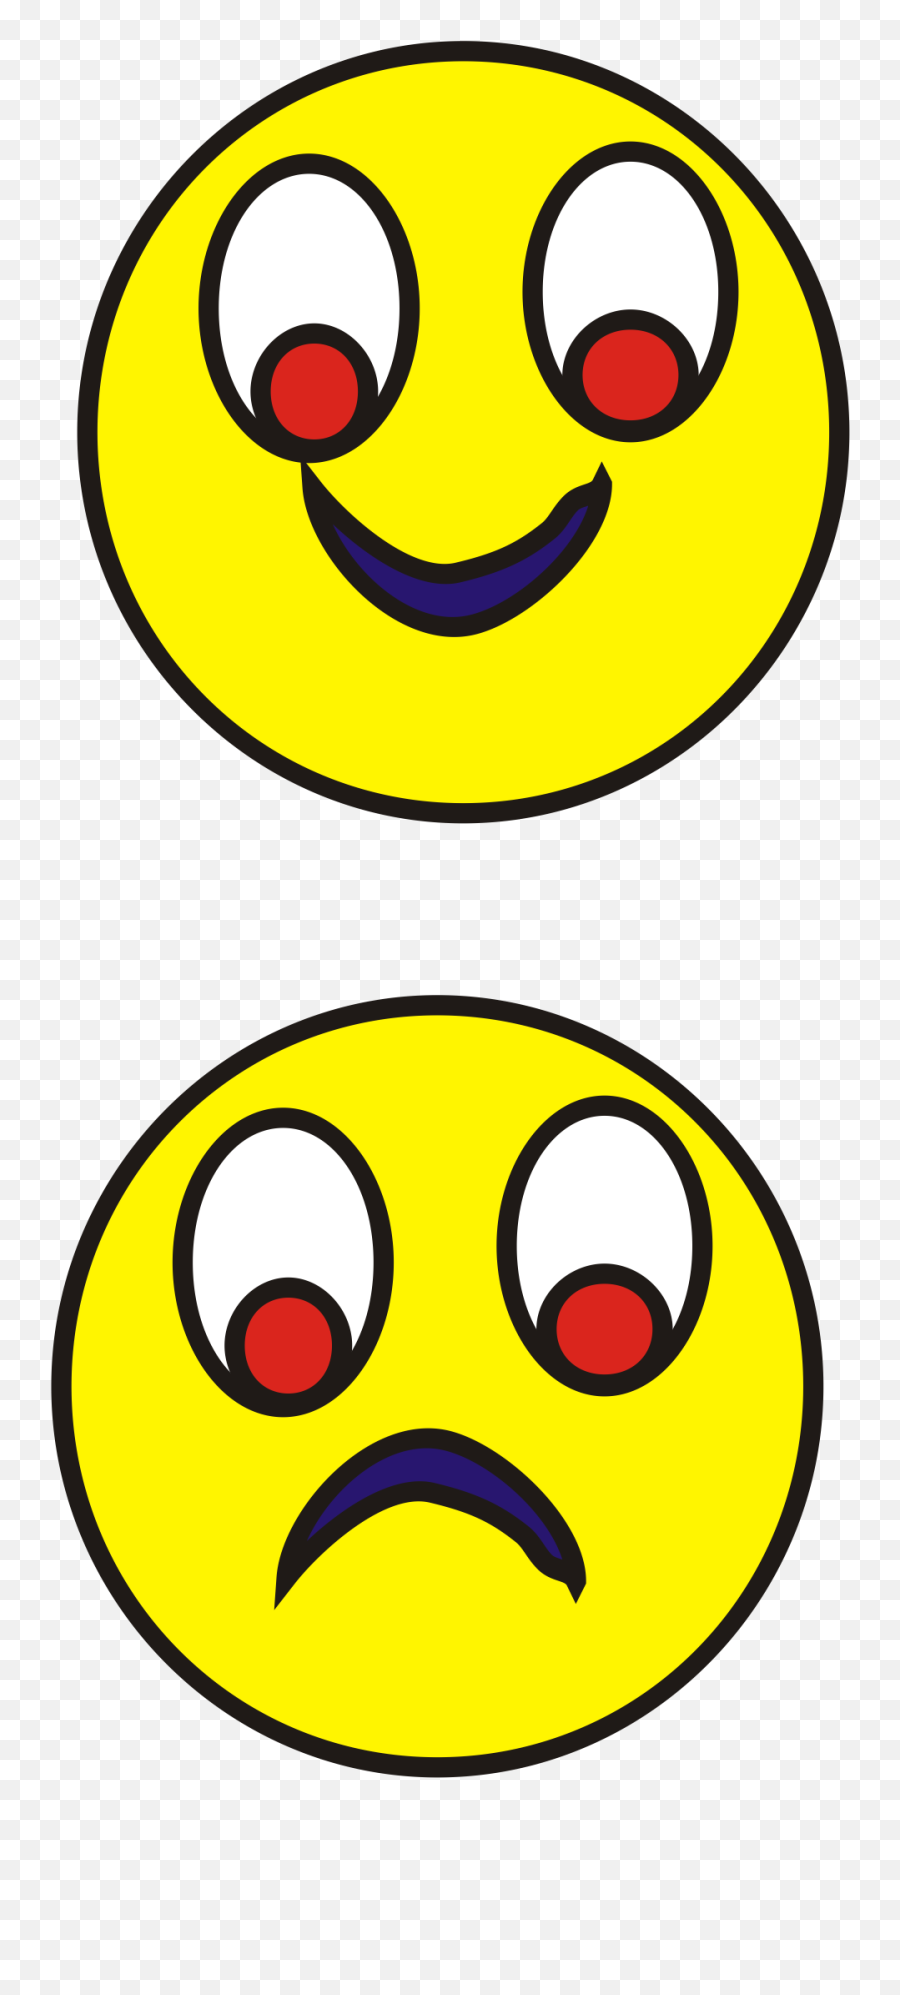 Gambar Smile Sad - Art And Craft For Happy Face Emoji,Gambar Smile Emoticon